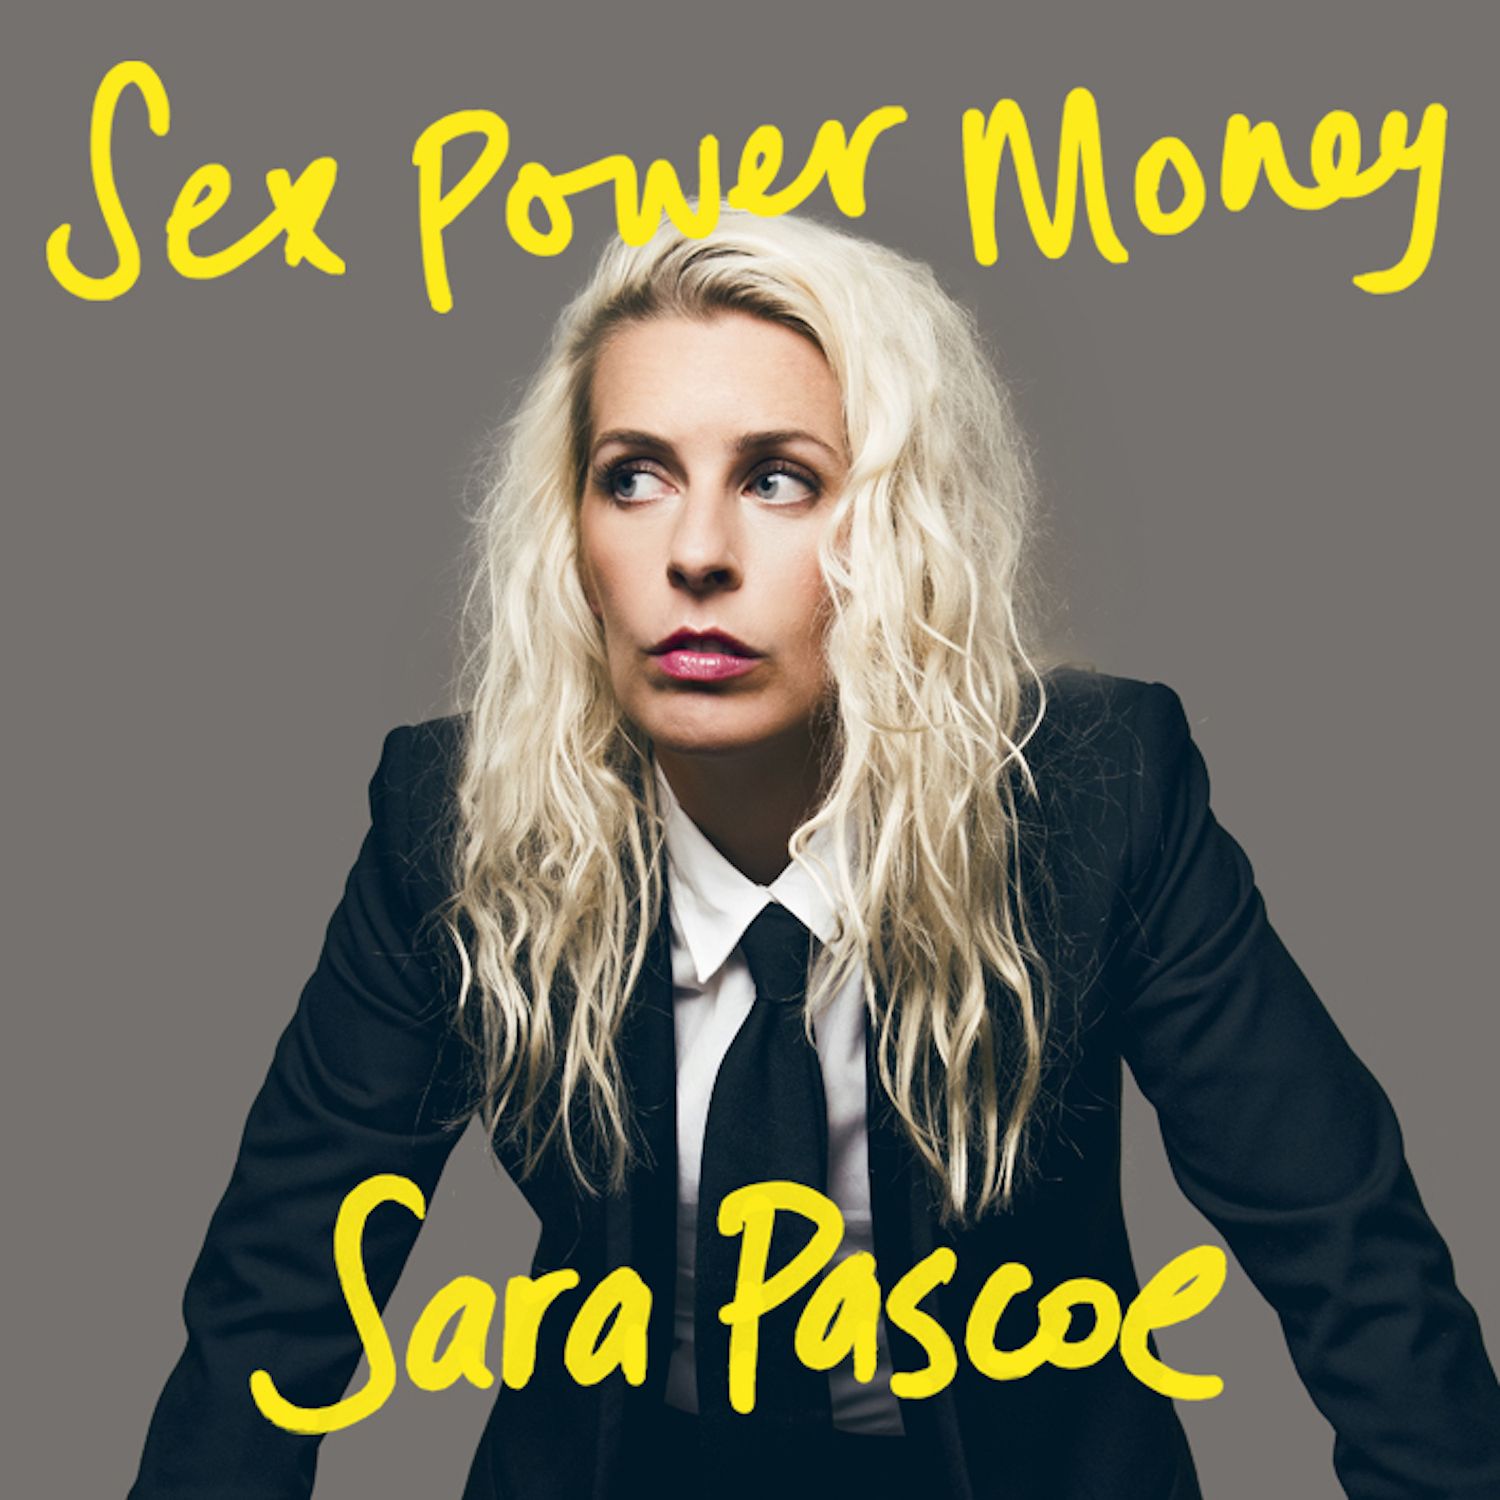 Sex Power Money With Sara Pascoe pic